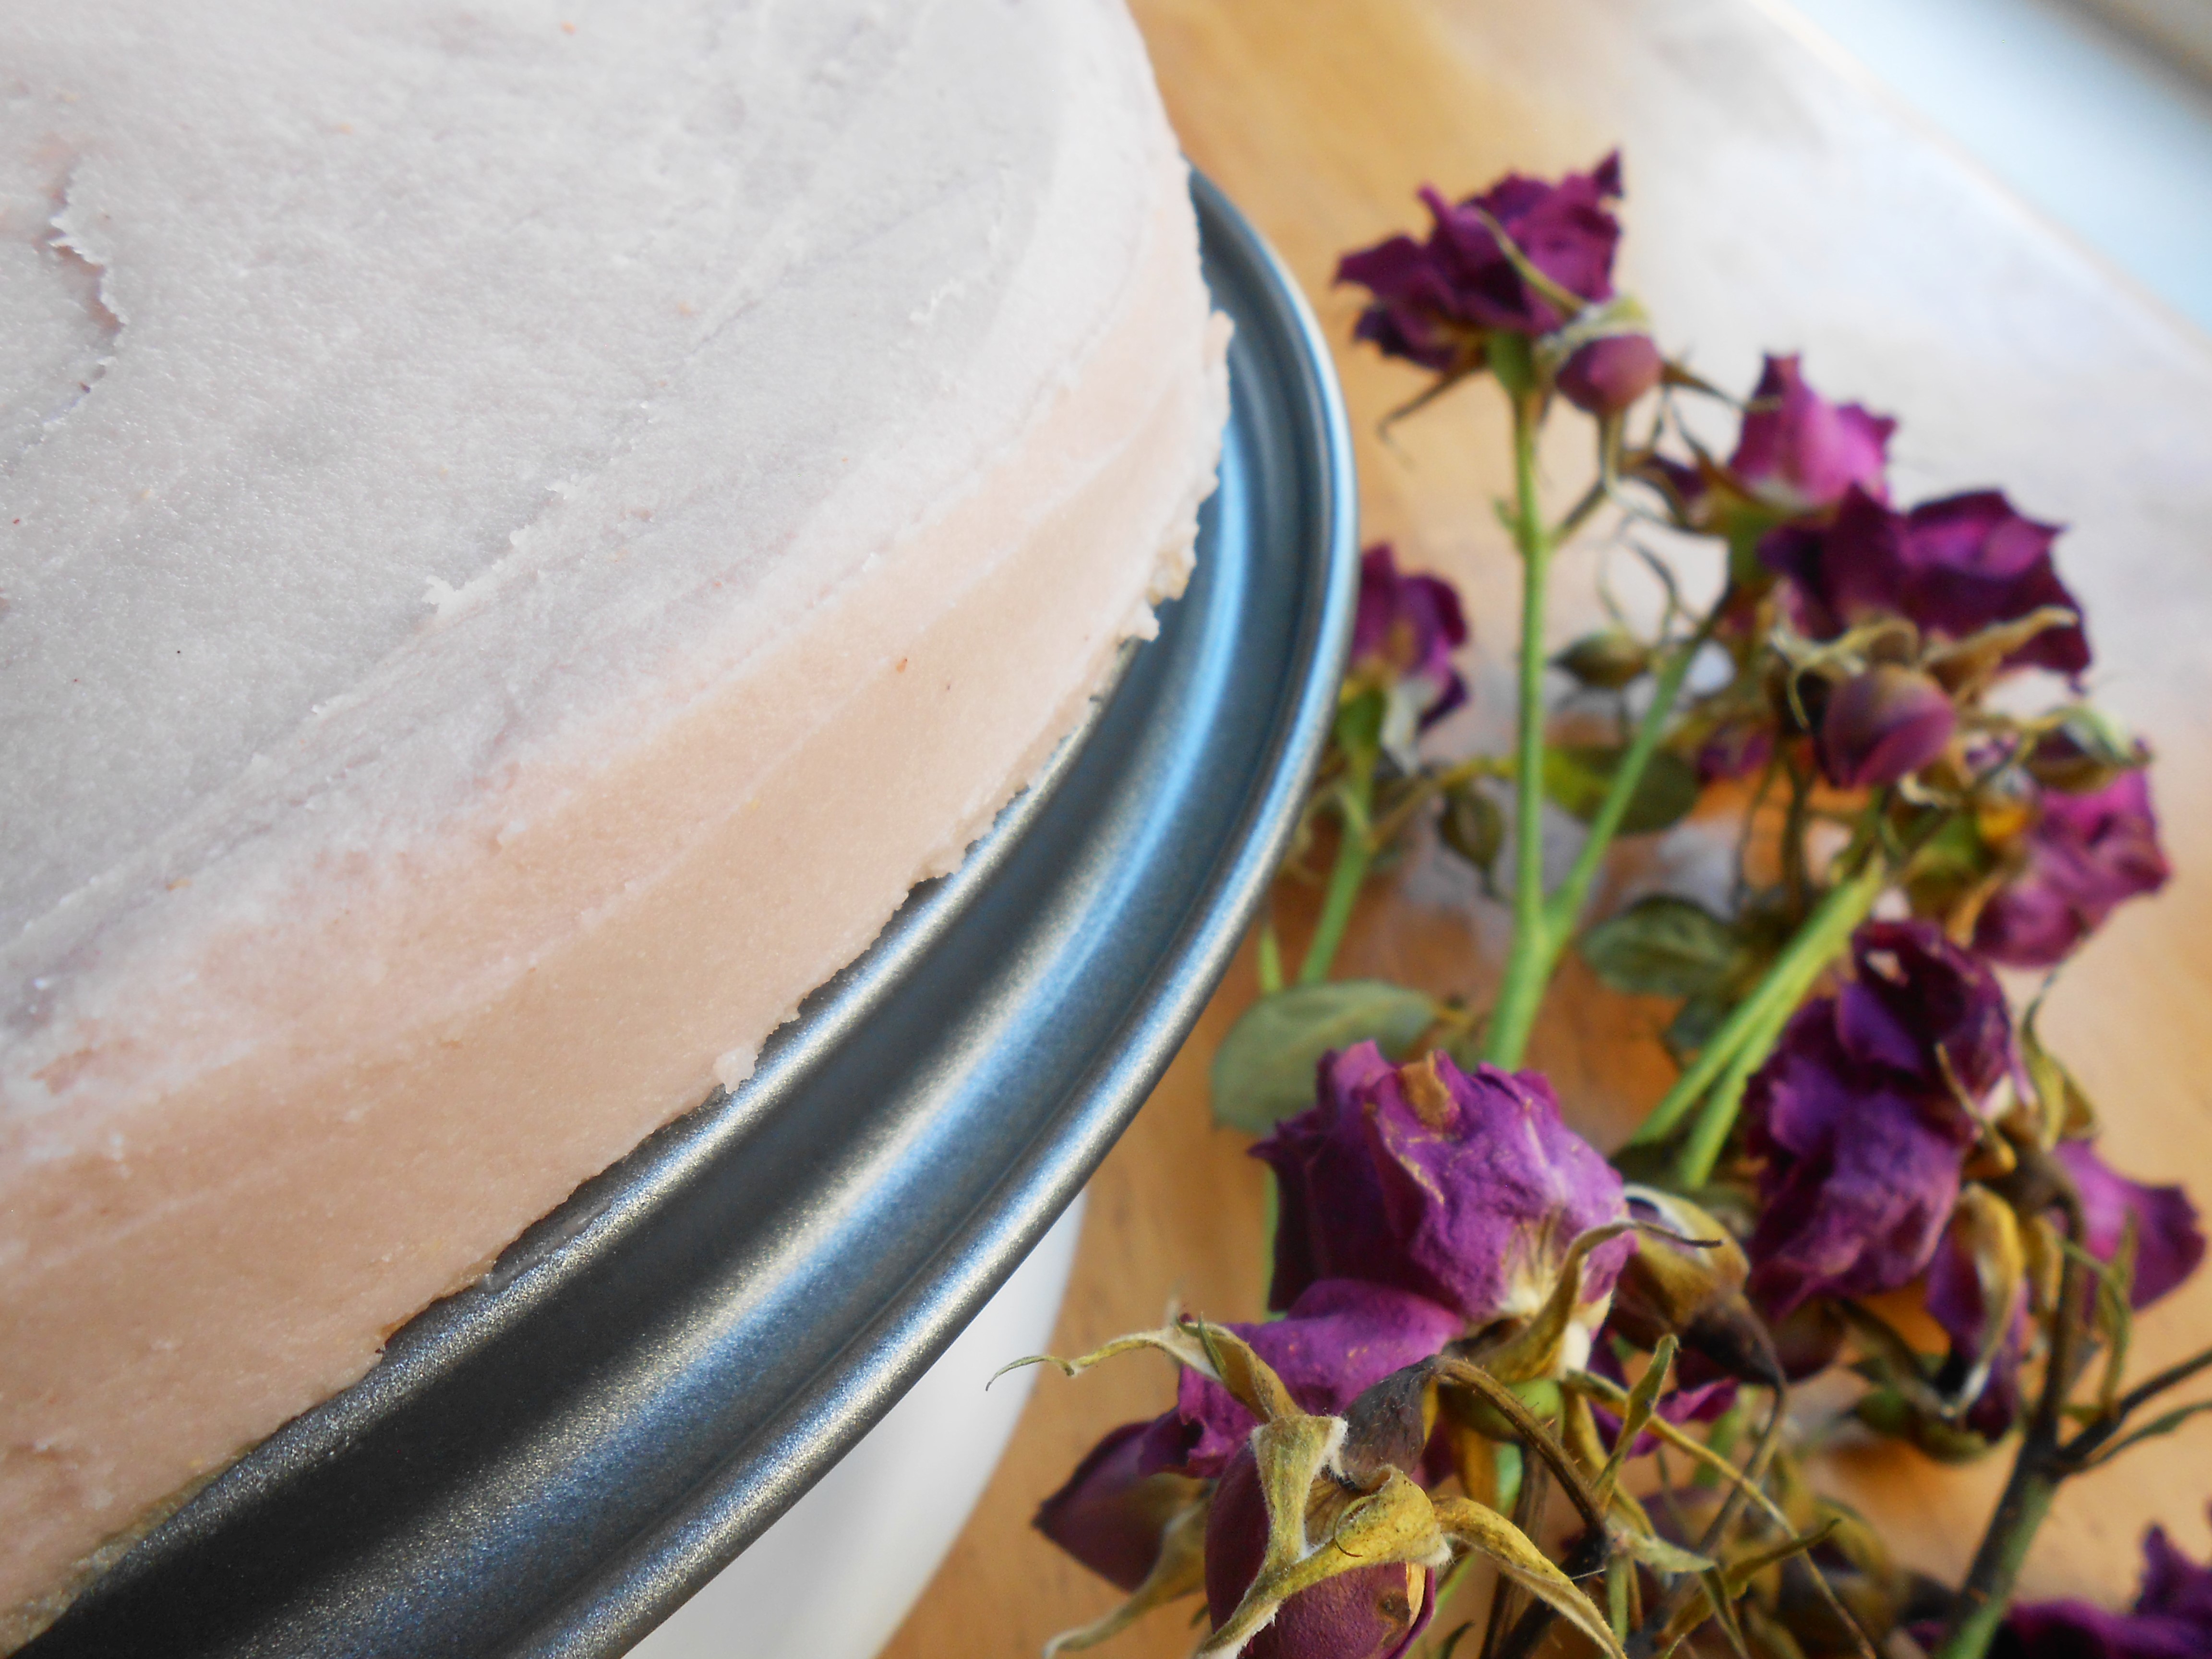 RECIPE: Blender Vanilla Cake with Coconut-Raspberry Frosting